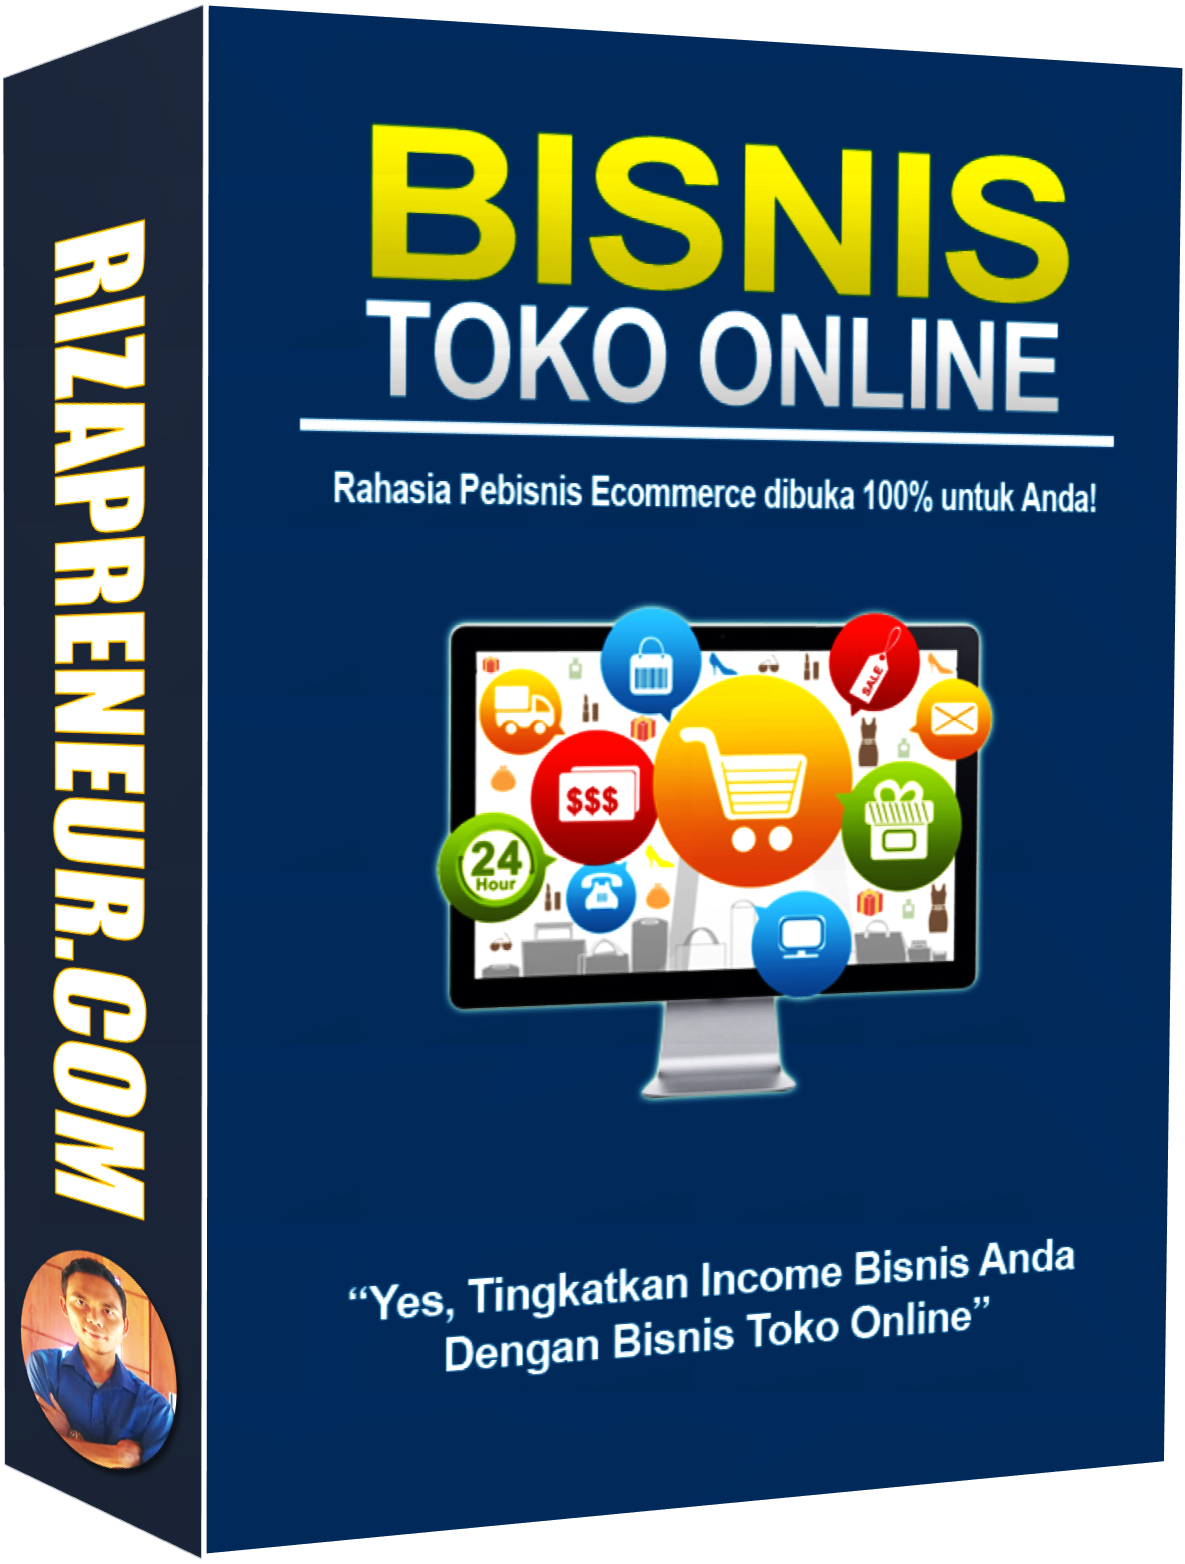 Toko Digital - Rizapreneur.com: PLR Indonesia - Bisnis Toko Online